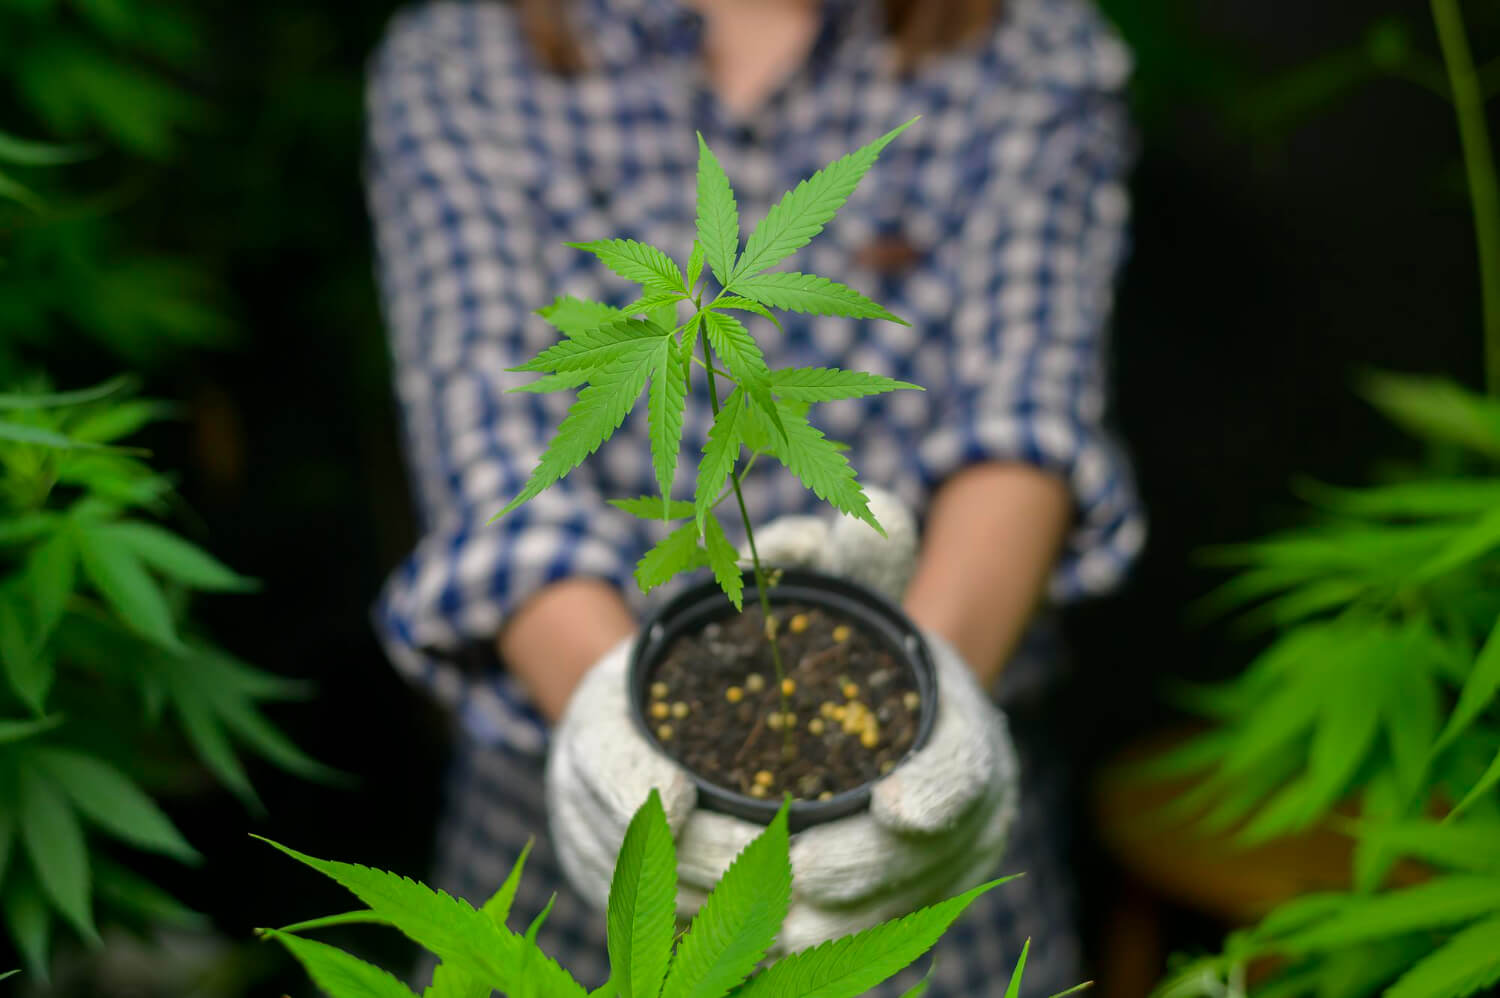 Regulators discuss home grown cannabis policy